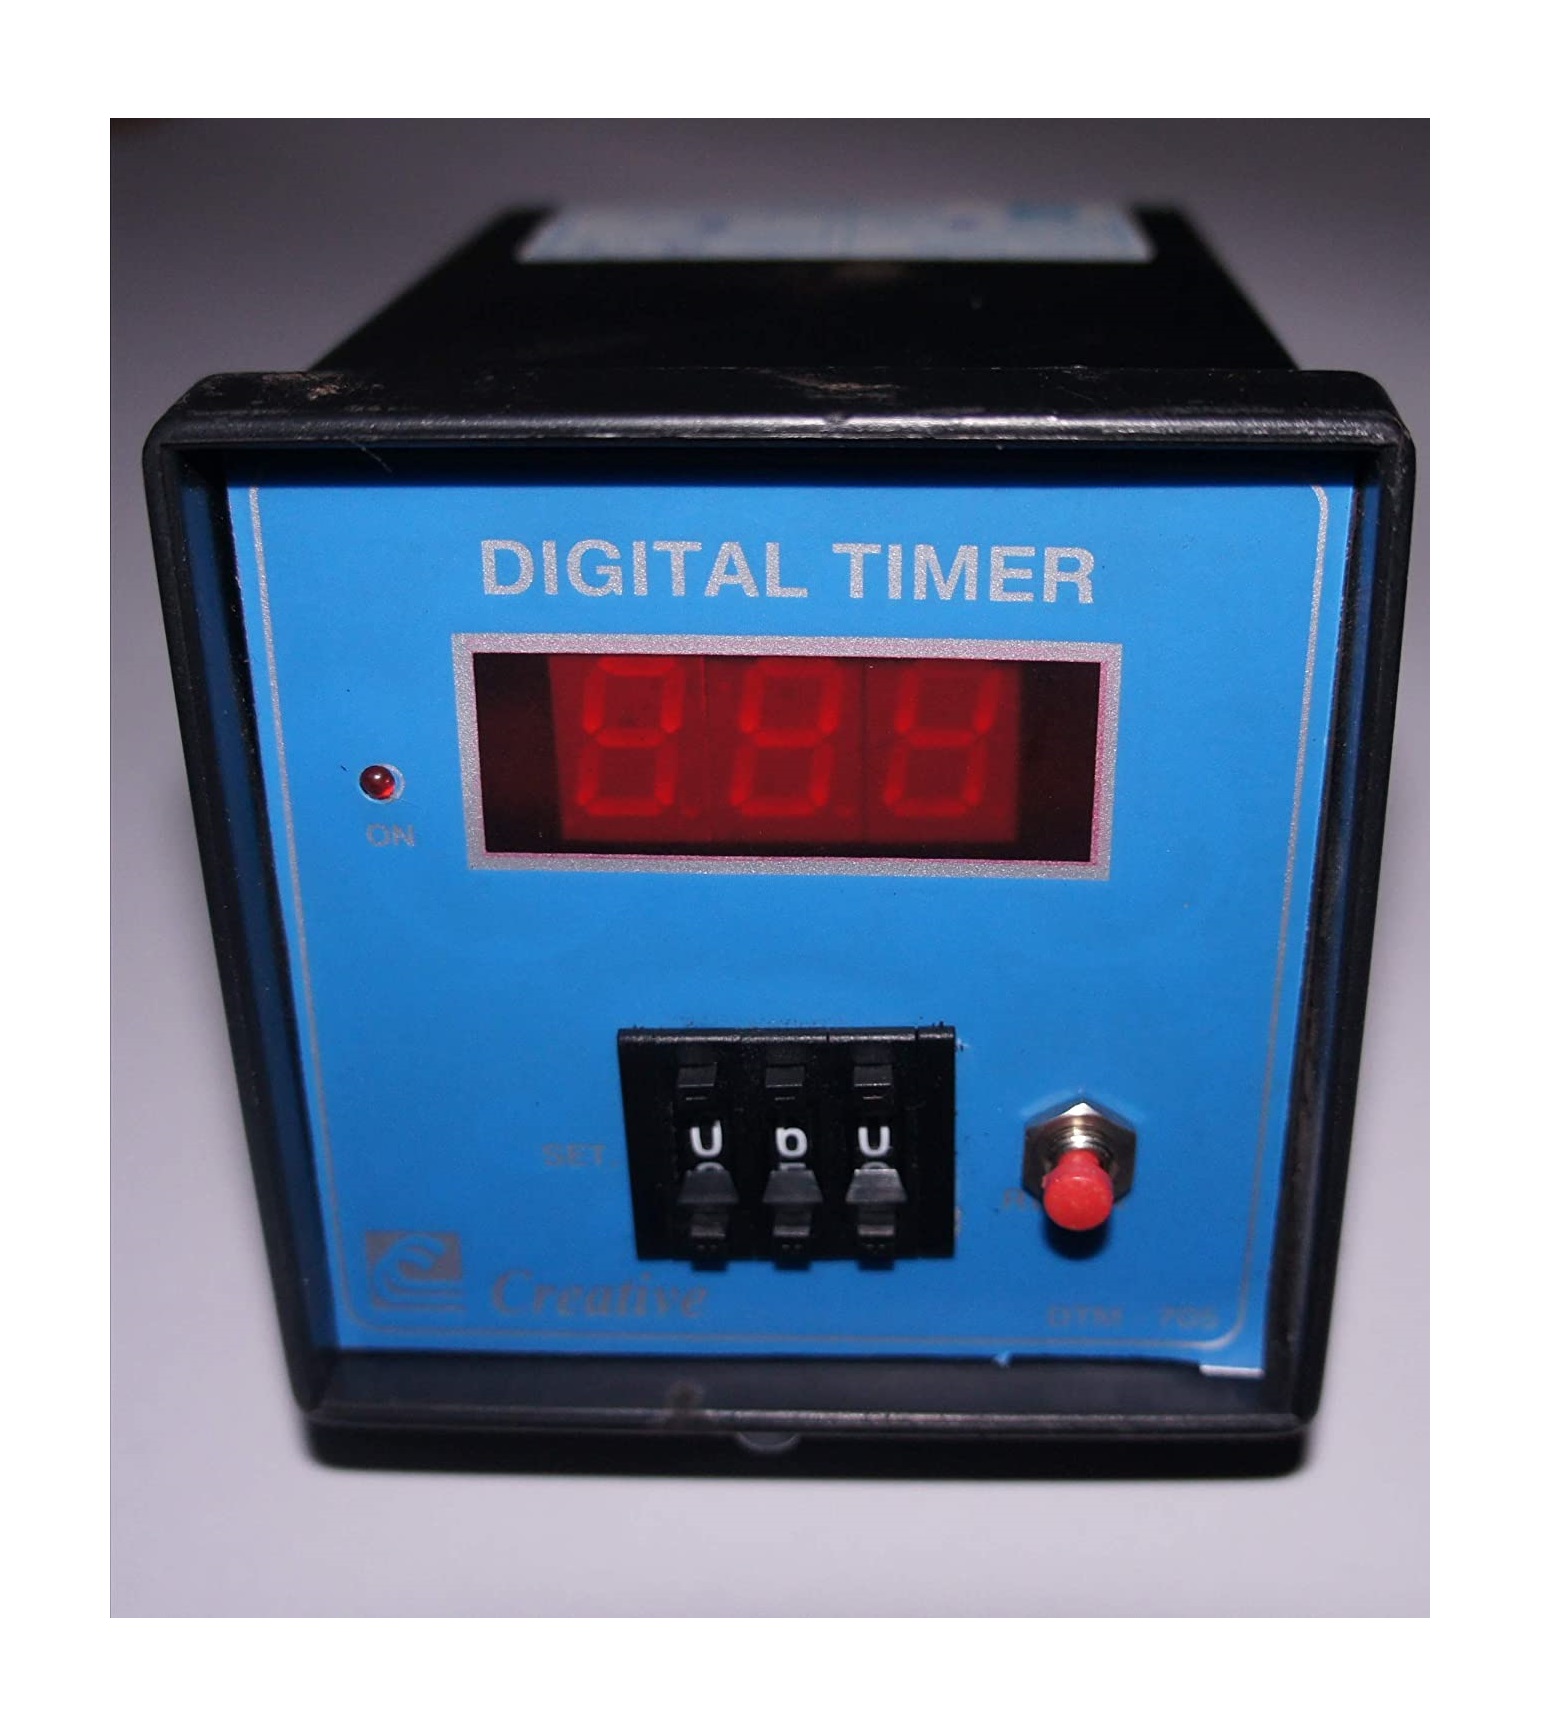 Creative Controls DTM-705 Digital Timer Multi Range 3 Digit Panel Type